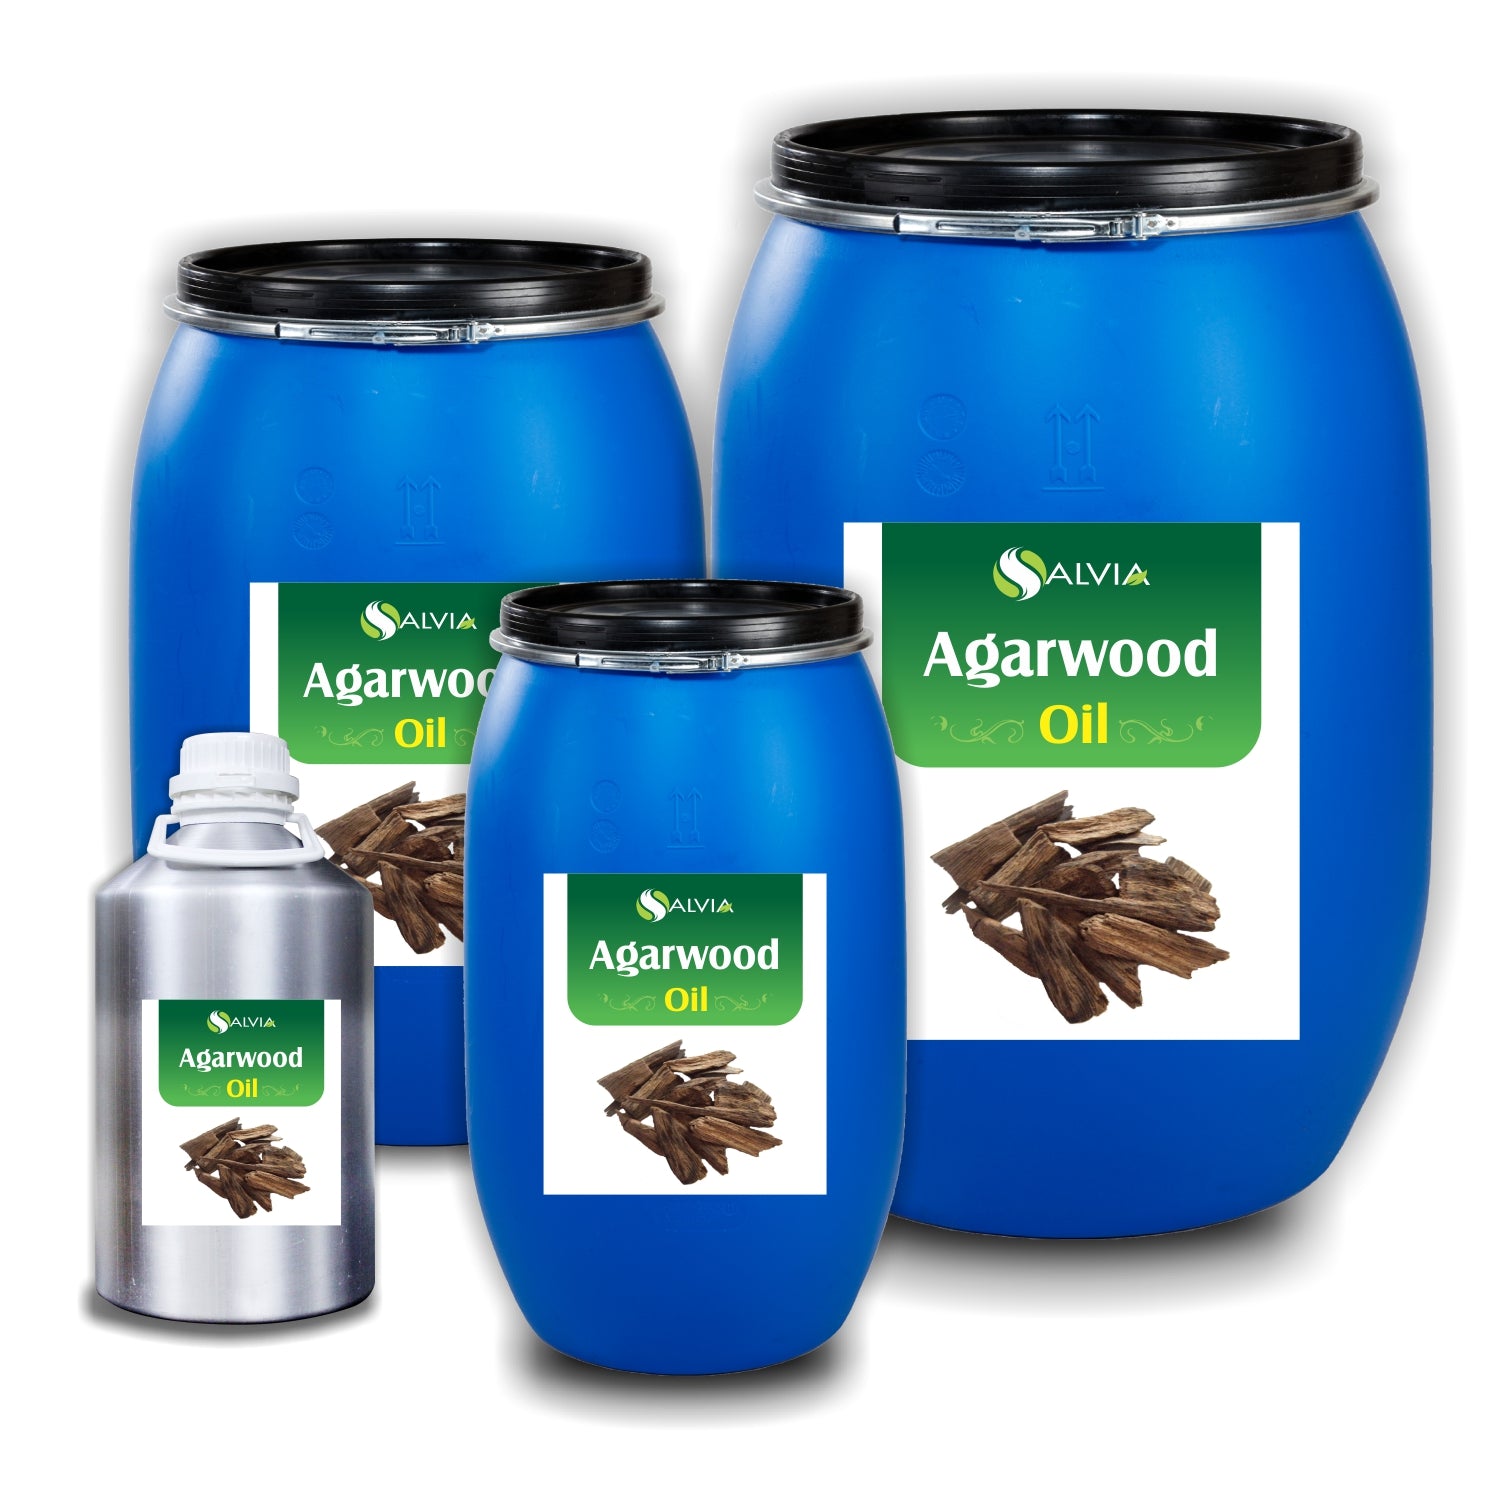 Salvia Natural Essential Oils,Anti Ageing,Anti-ageing Oil 10kg Agarwood Essential Oil Therapeutic Grade